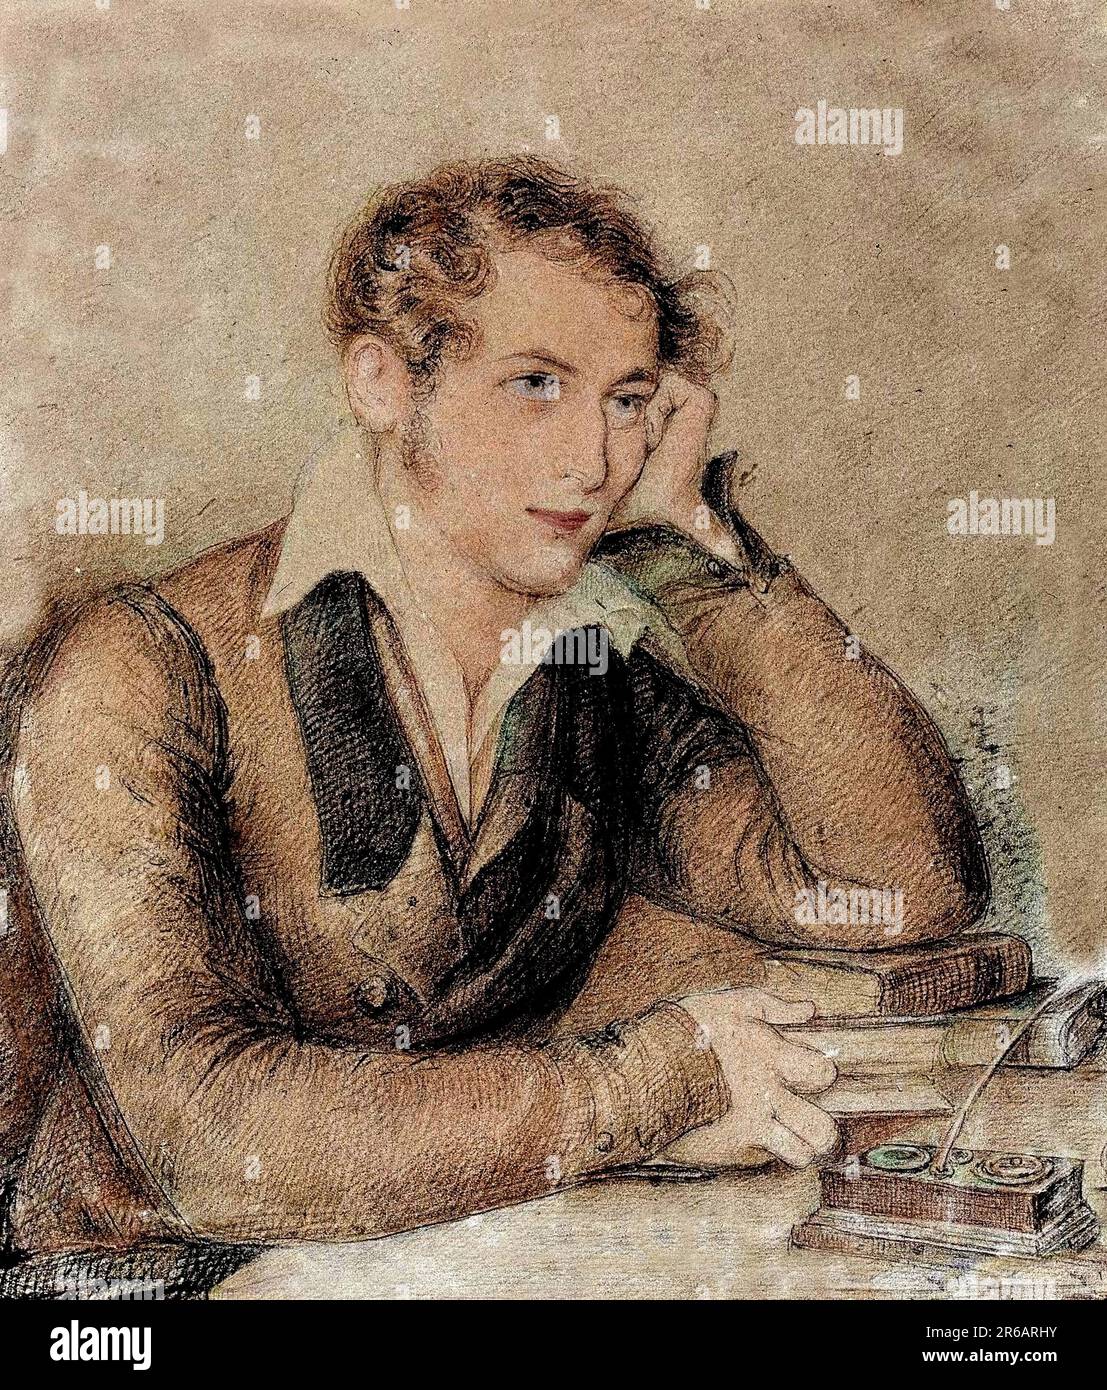 Portrait of Carlo Cattaneo - Italian philosopher, writer, and activist - Portrait de Carlo Cattaneo en 1826. d'apres un de  Ernesta Bisi. Stock Photo